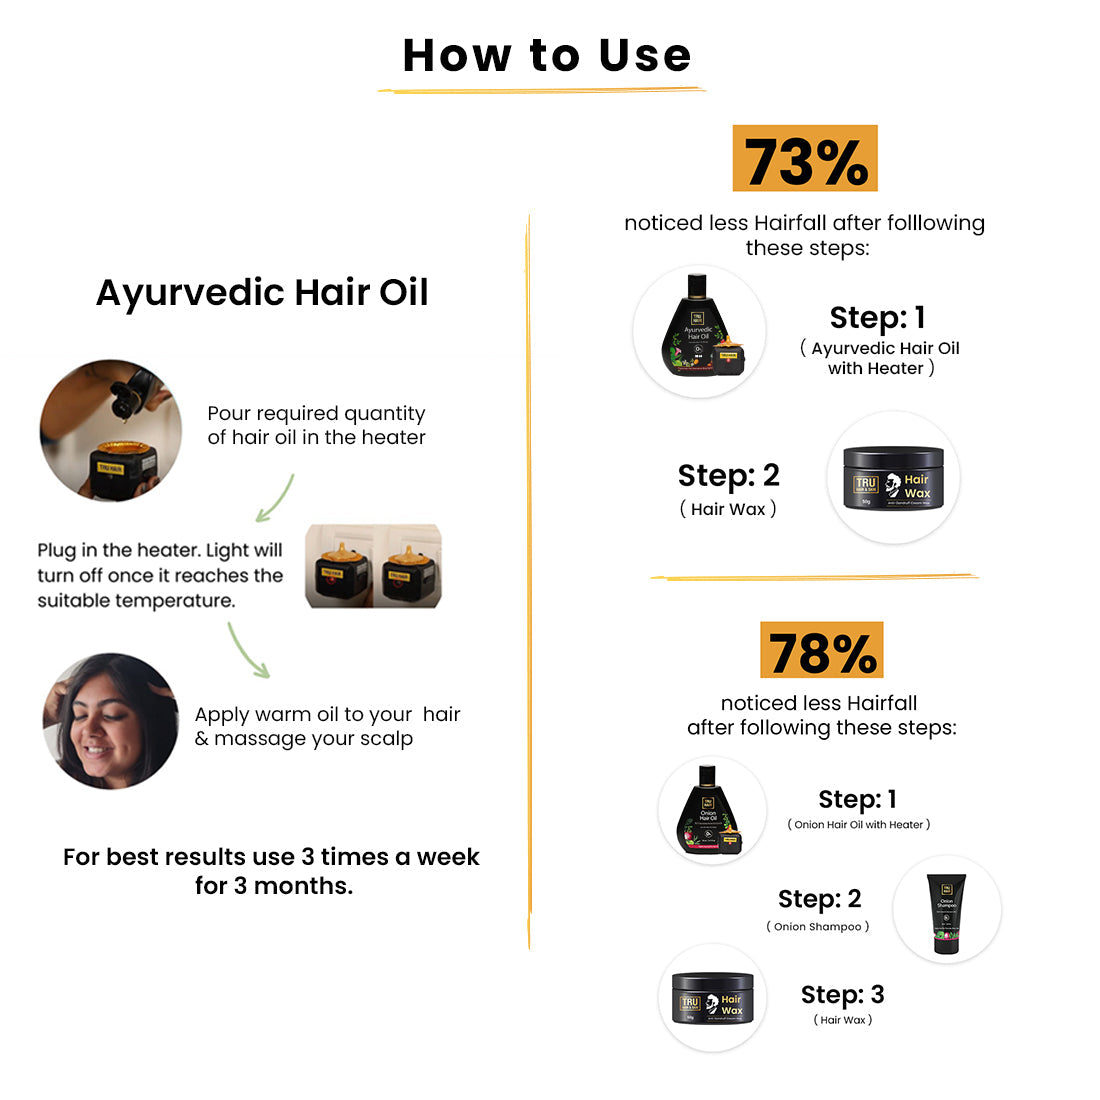 Ayurvedic oil with Heater 50ml +Free Hair Wax 50gms.